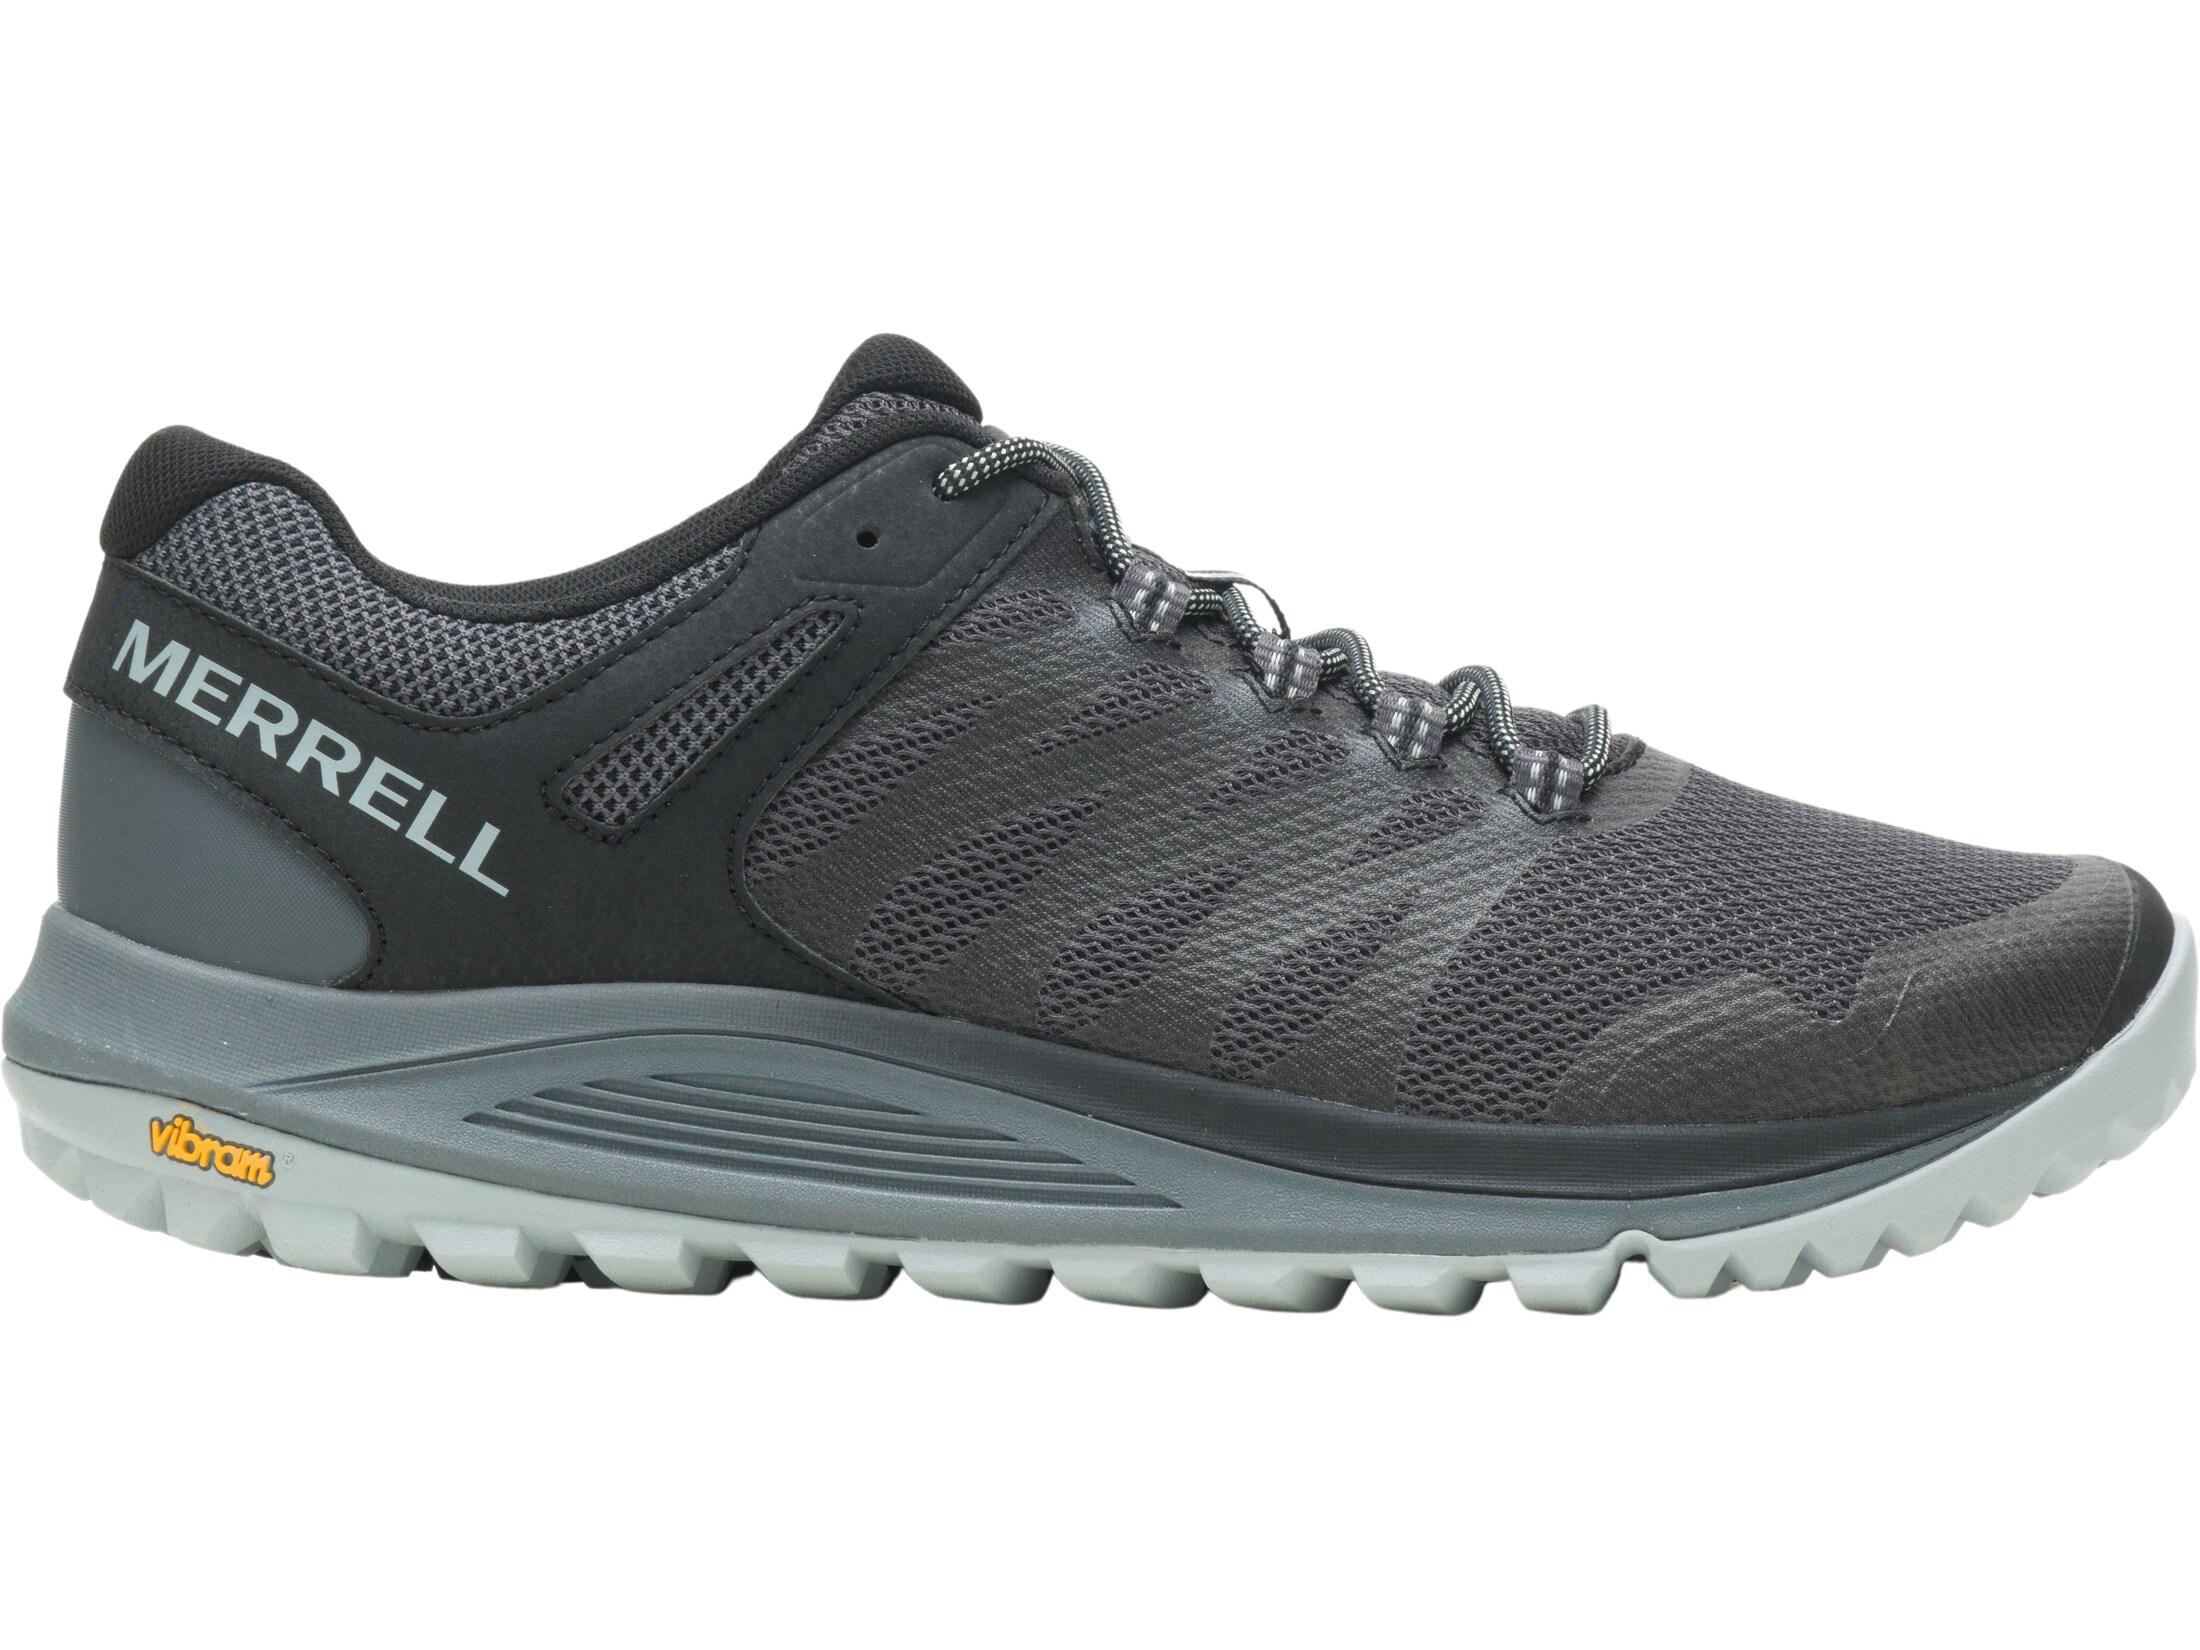 Merrell Nova 2 Hiking Shoes Rubber/ Synthetic Black Men's 9.5 D